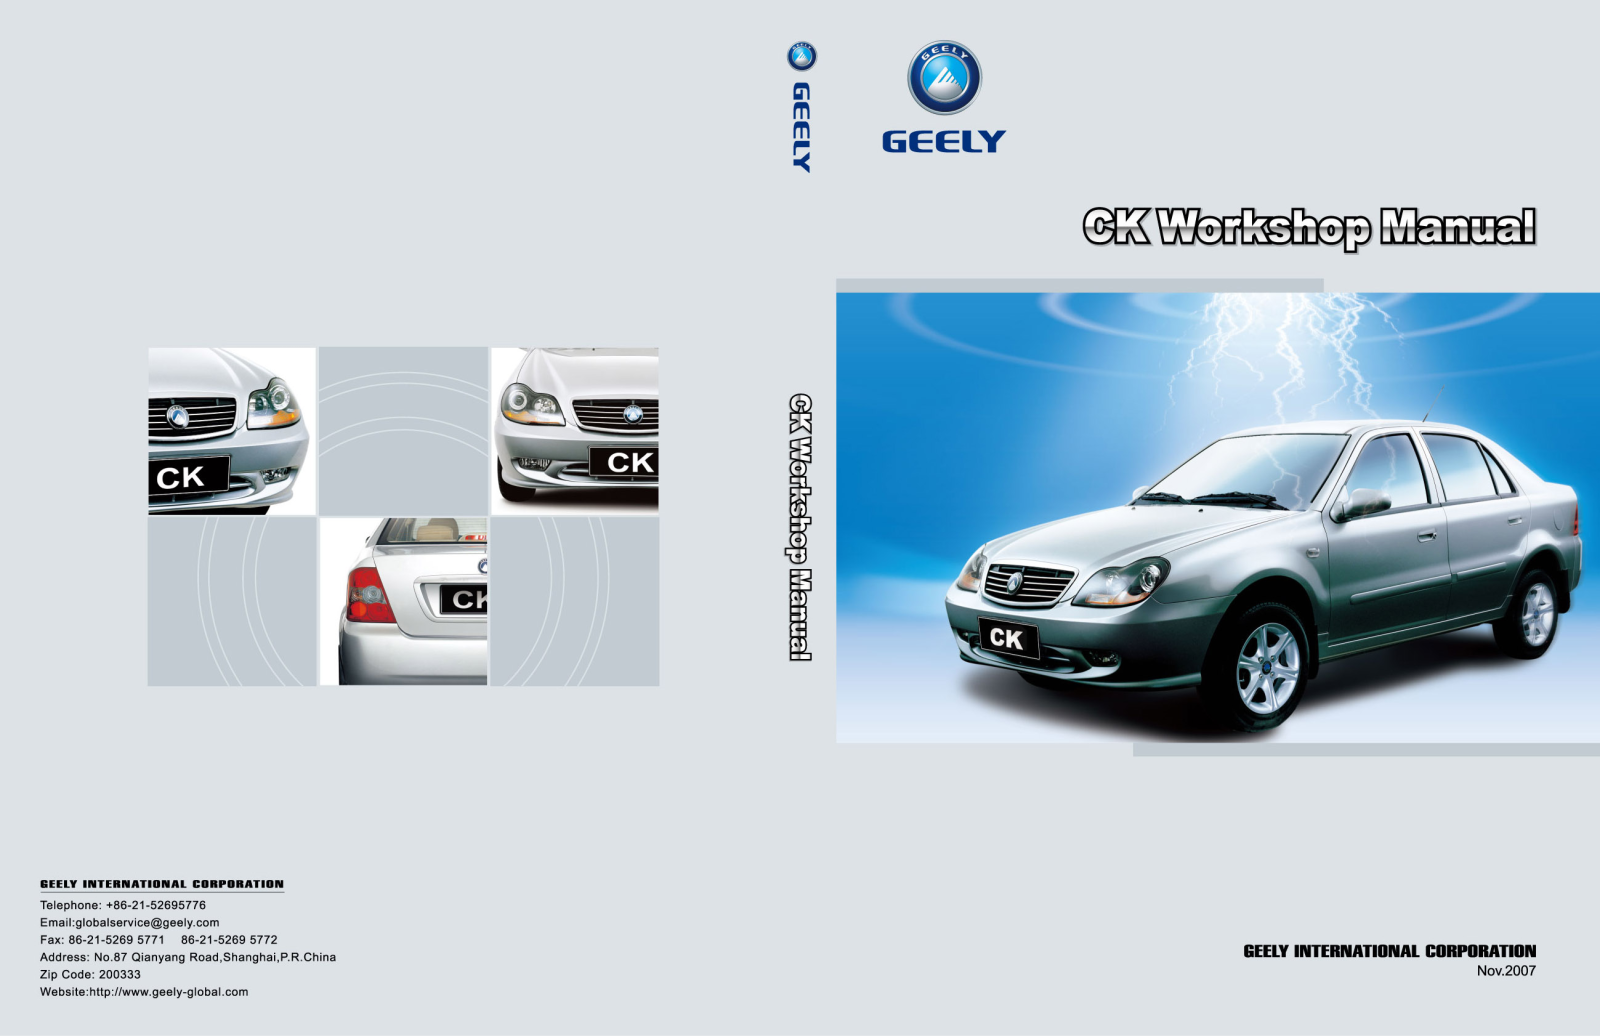 Geely CK 2009, CK 2007, CK 2008, CK 2010 User Manual